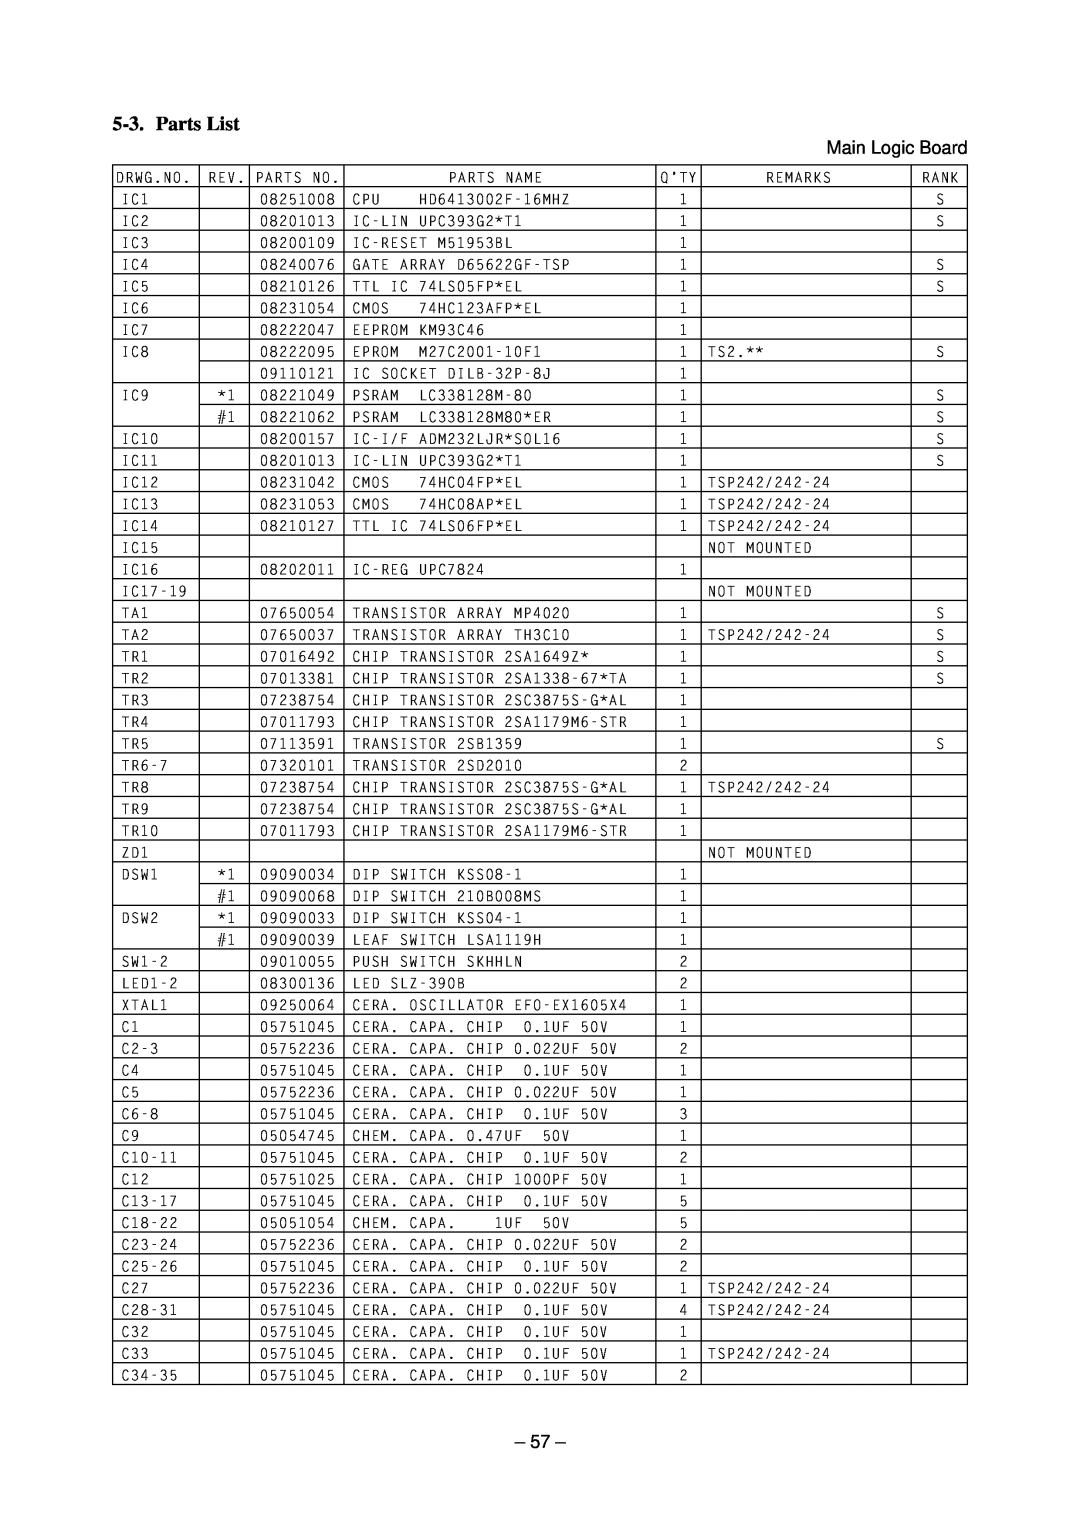 Star Micronics TSP200 technical manual Parts List, Main Logic Board 